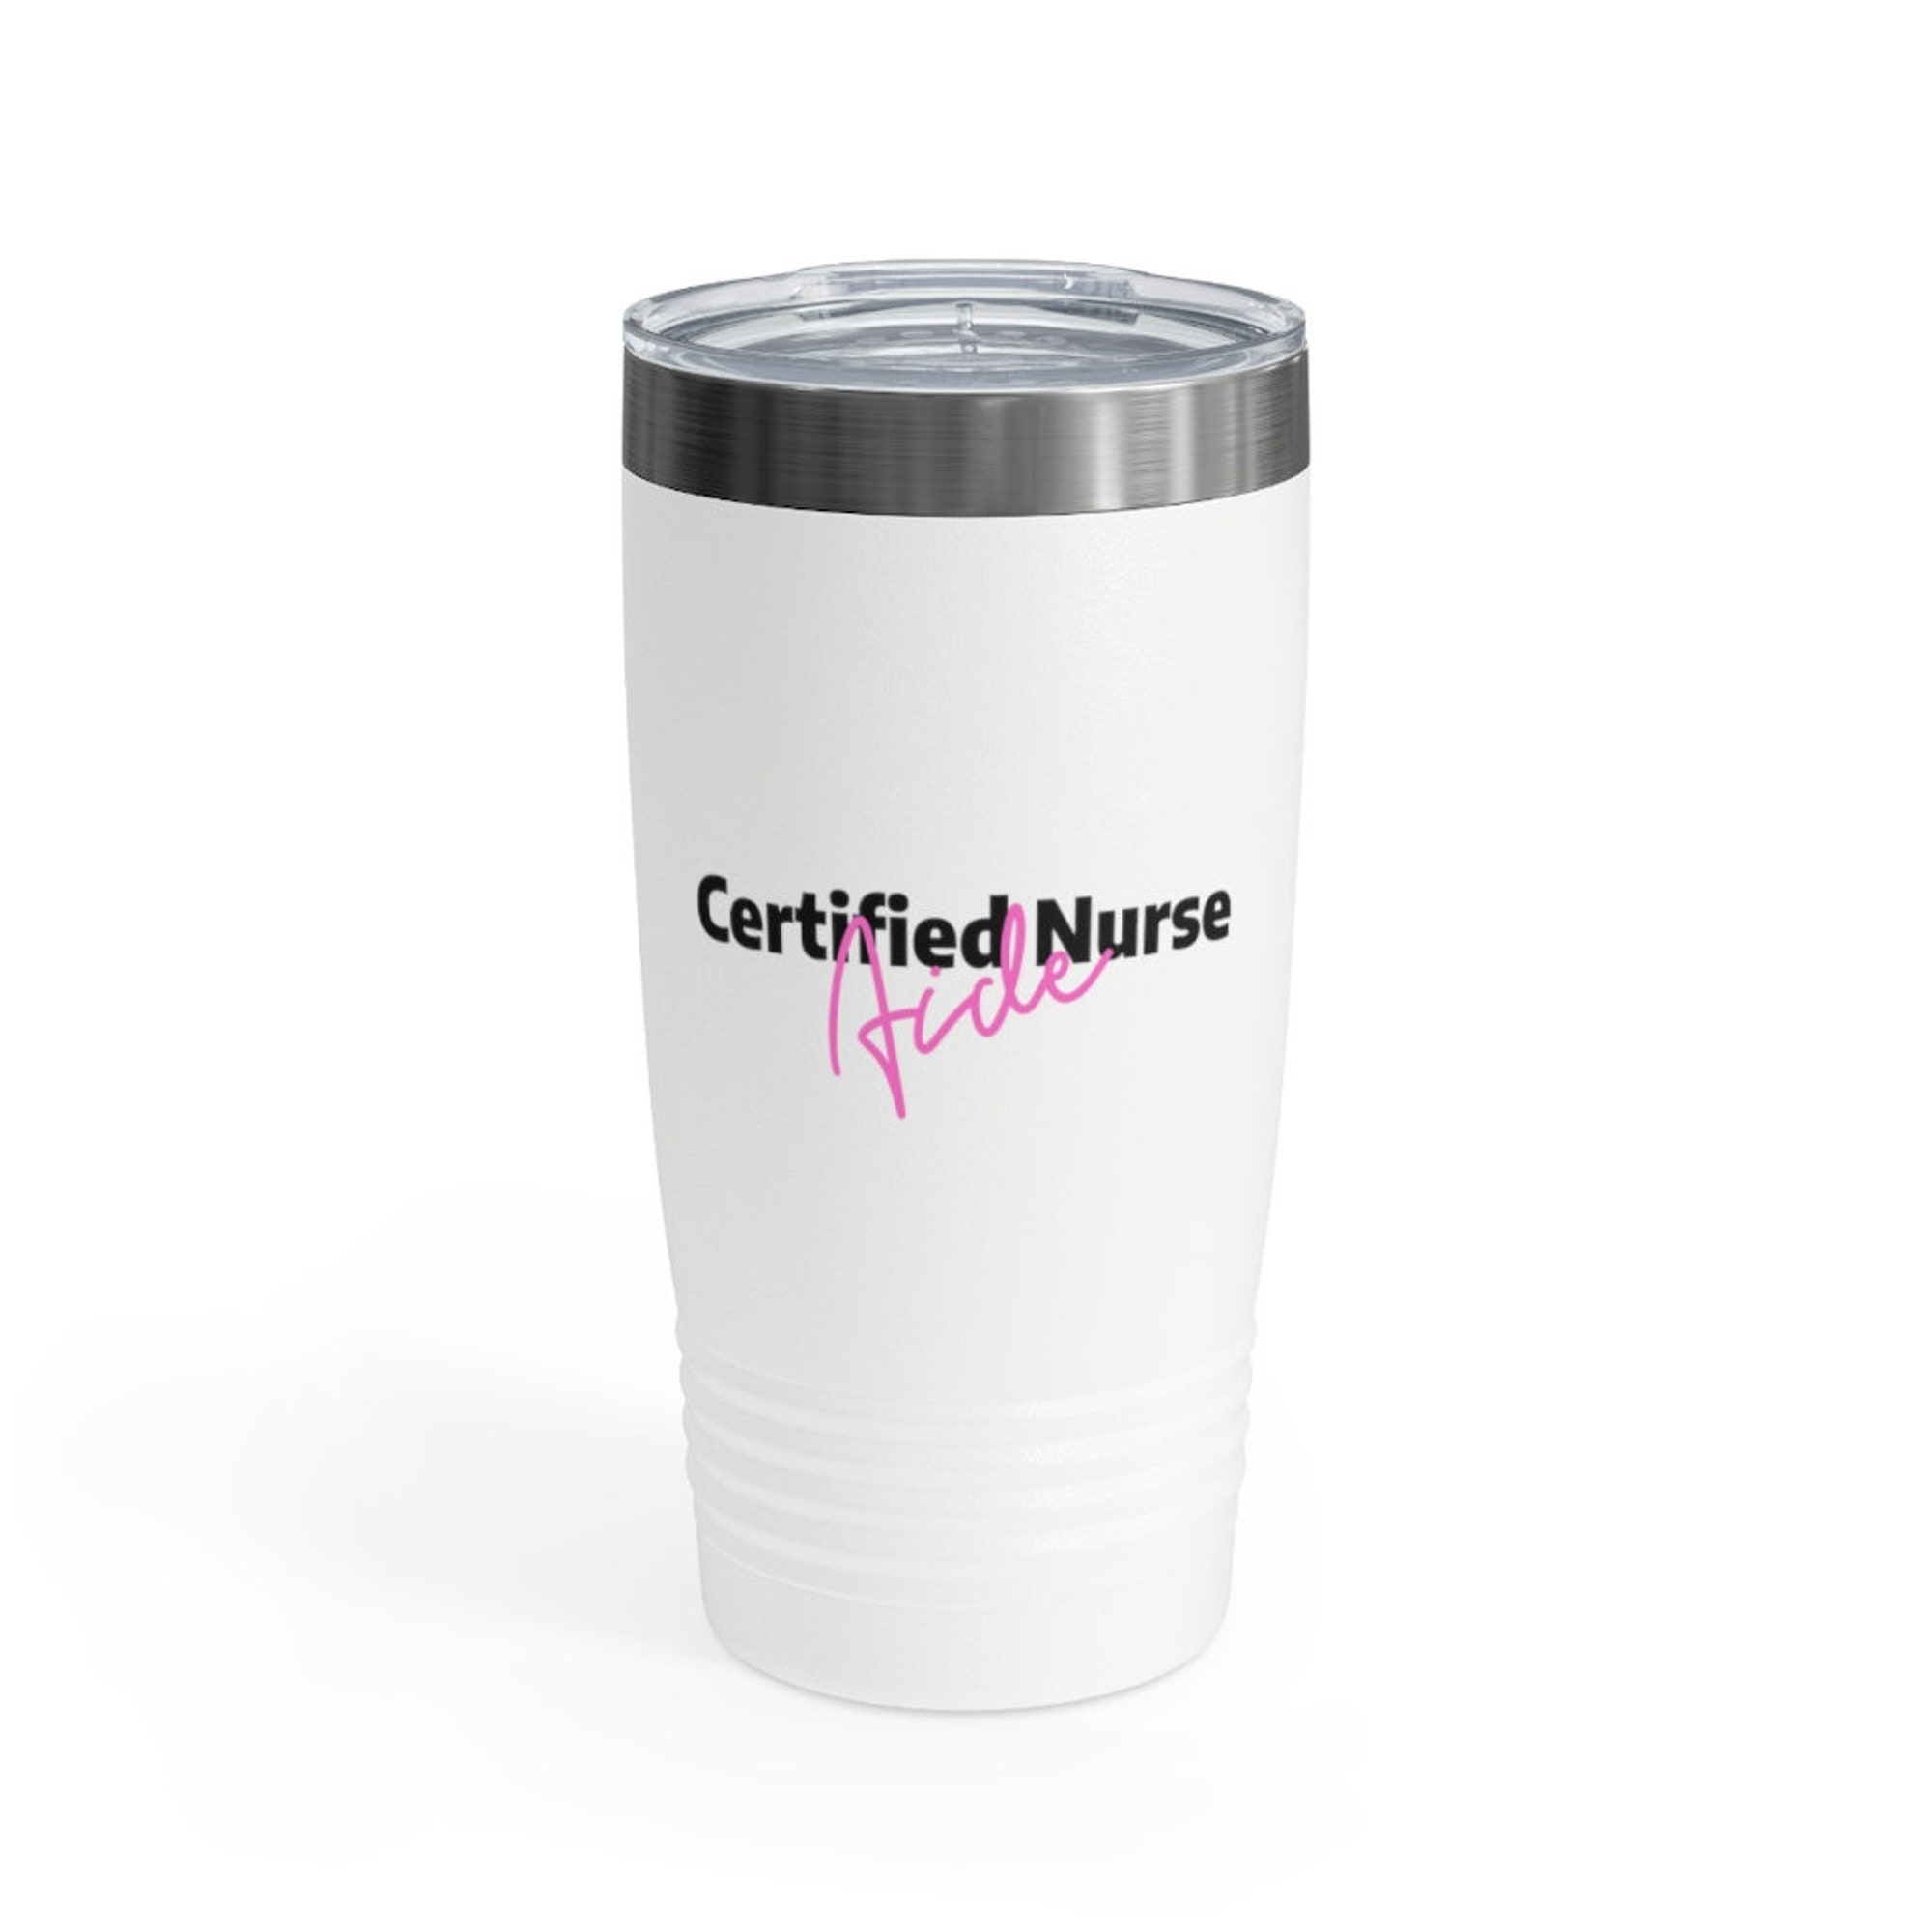 Certified Nurse Aide Tumbler, 20oz